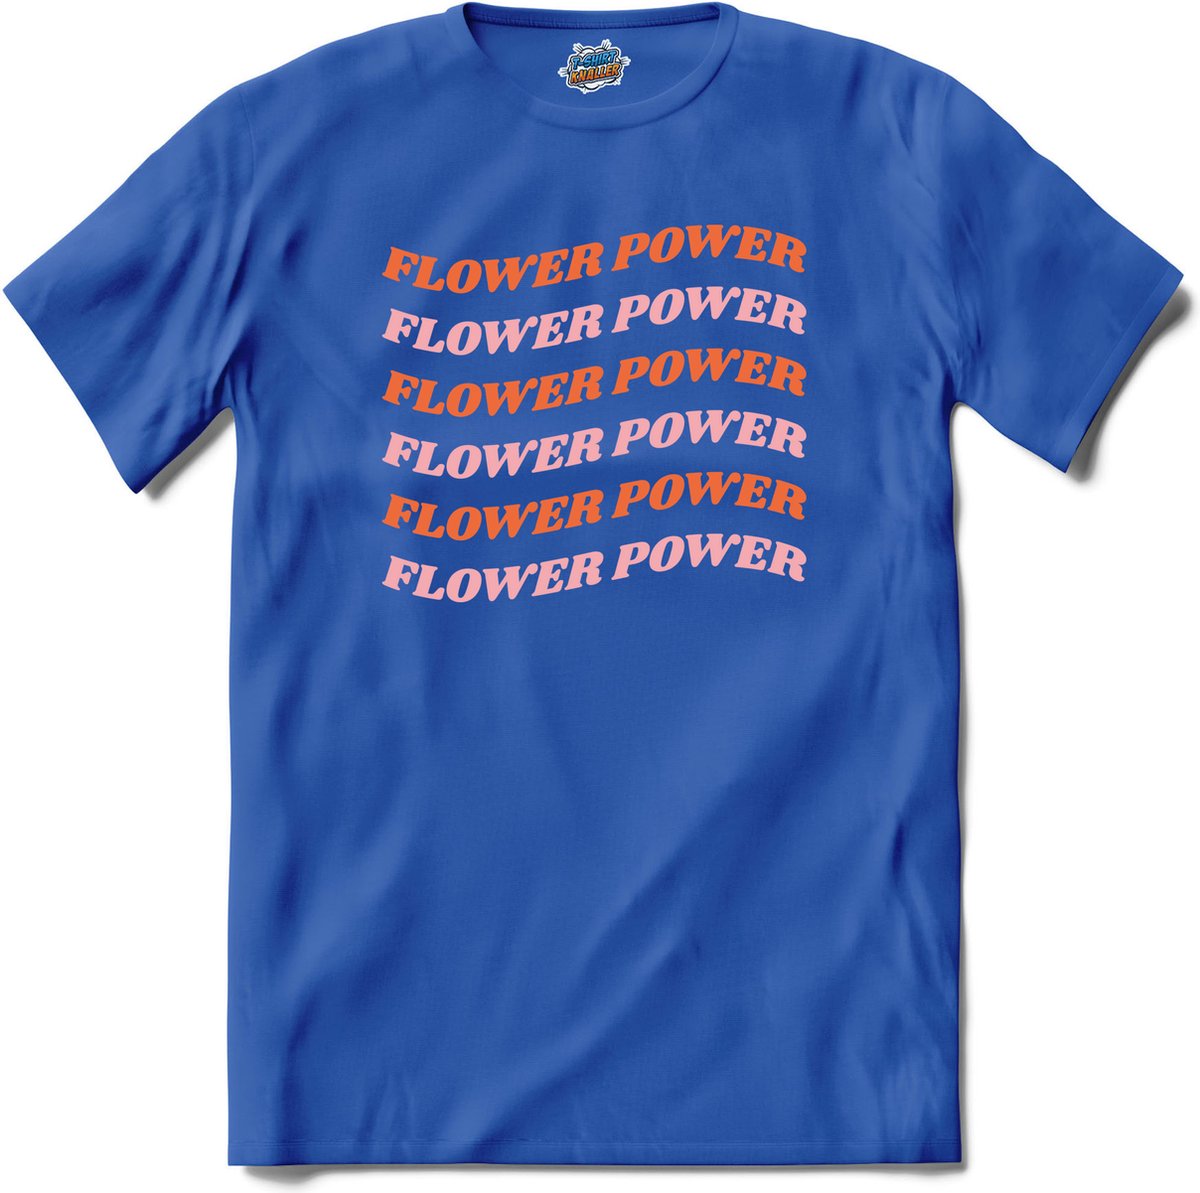 Flower power - T-Shirt - Jongens - Royal Blue - Maat 6 jaar